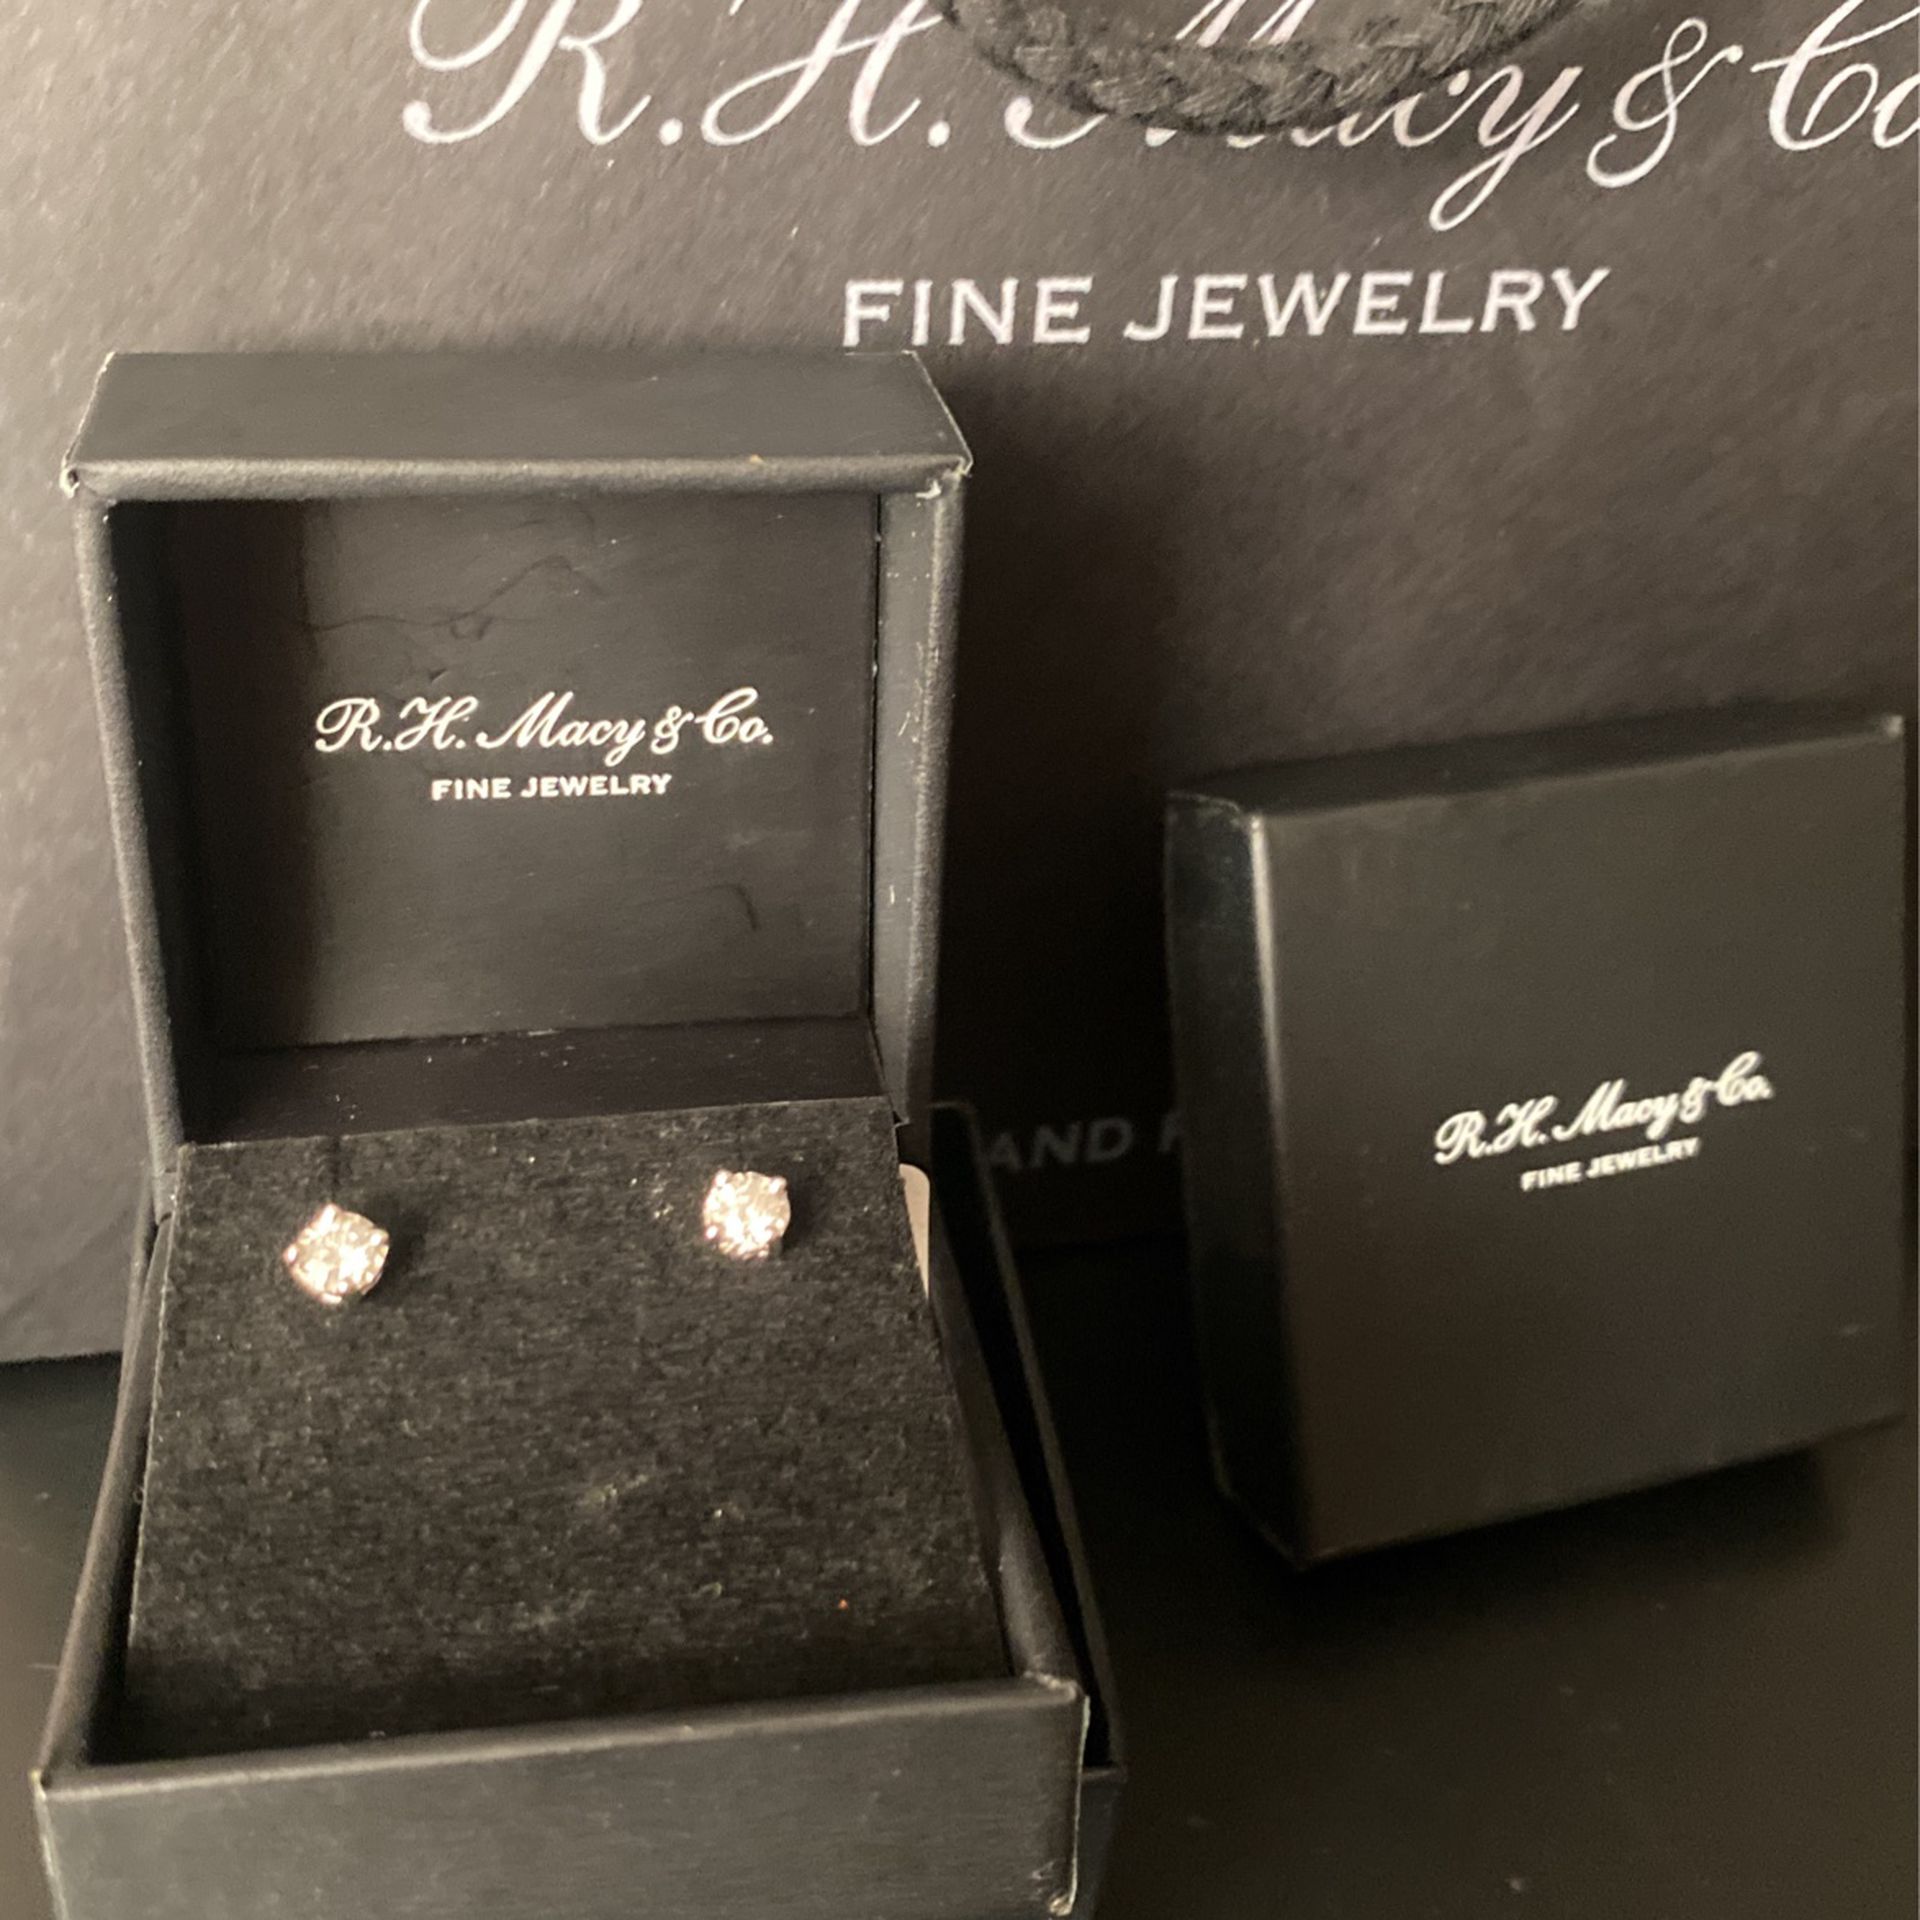 Genuine Diamonds And 14 Karat Gold Earrings From Macys 